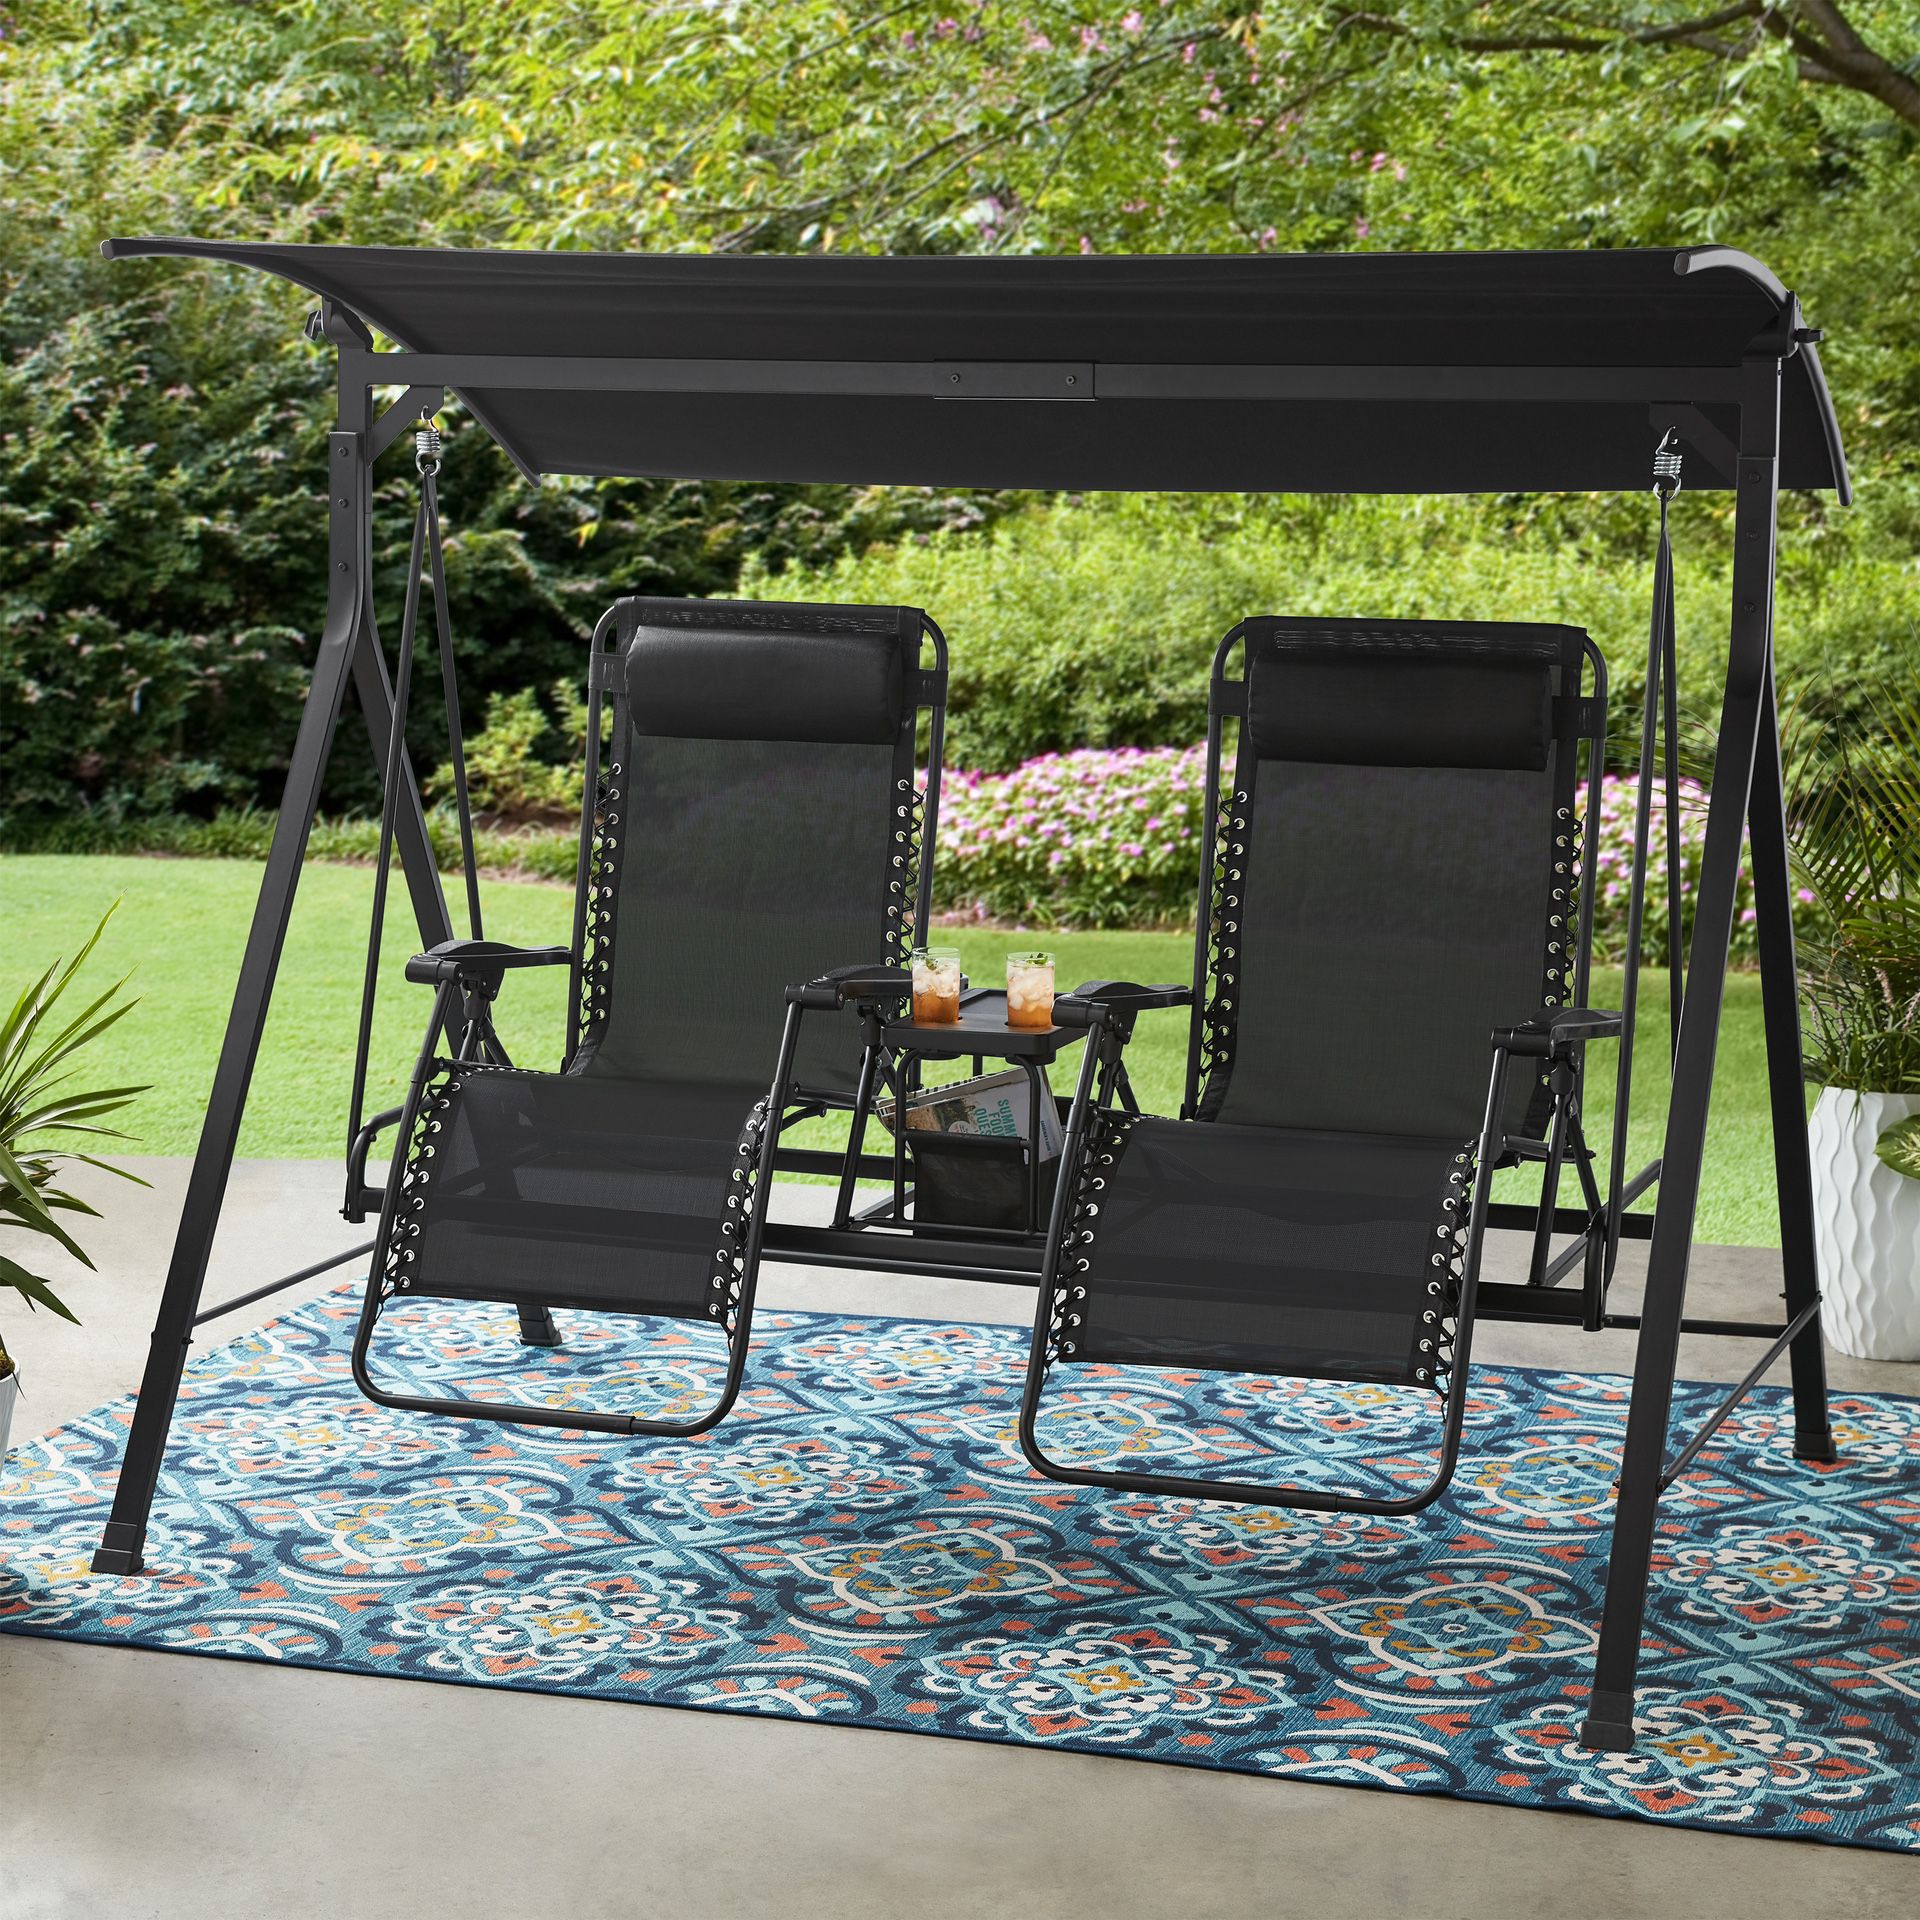 Mainstays Zero-Gravity Steel Porch Swing, Multiple Colors Black - 90.55*58.27*72.44